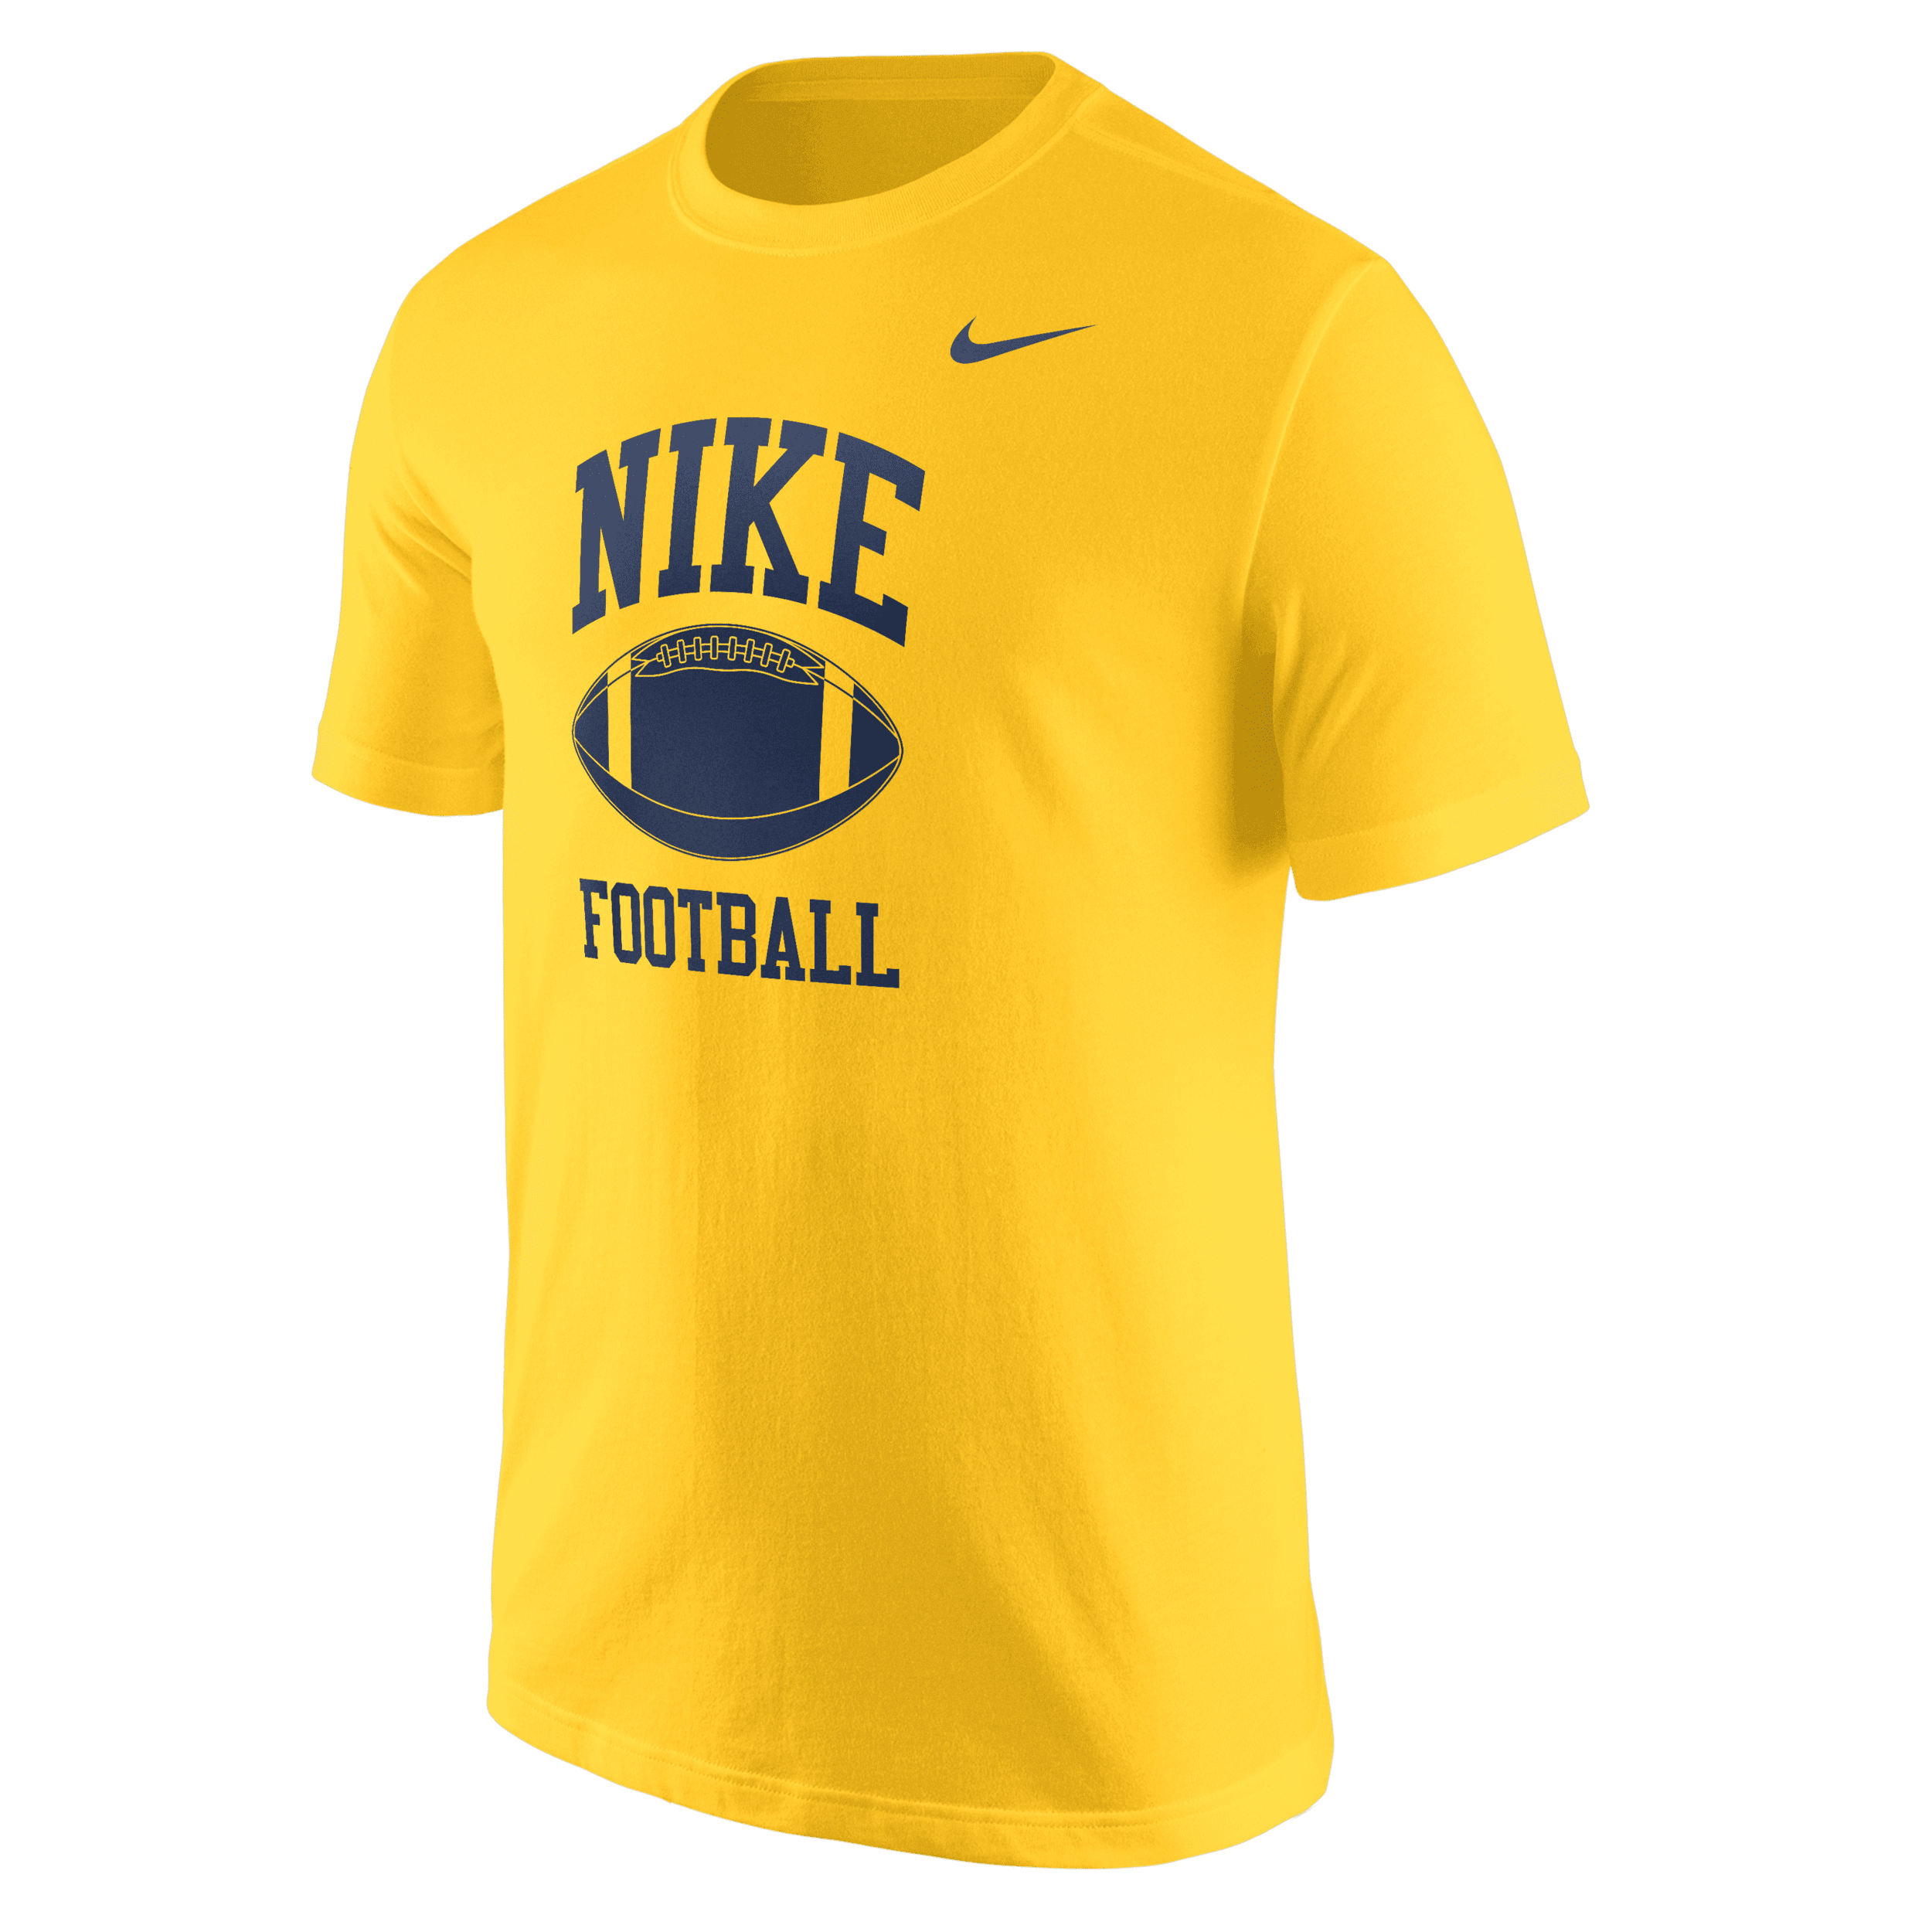 Nike Men's Football T-shirt In Yellow